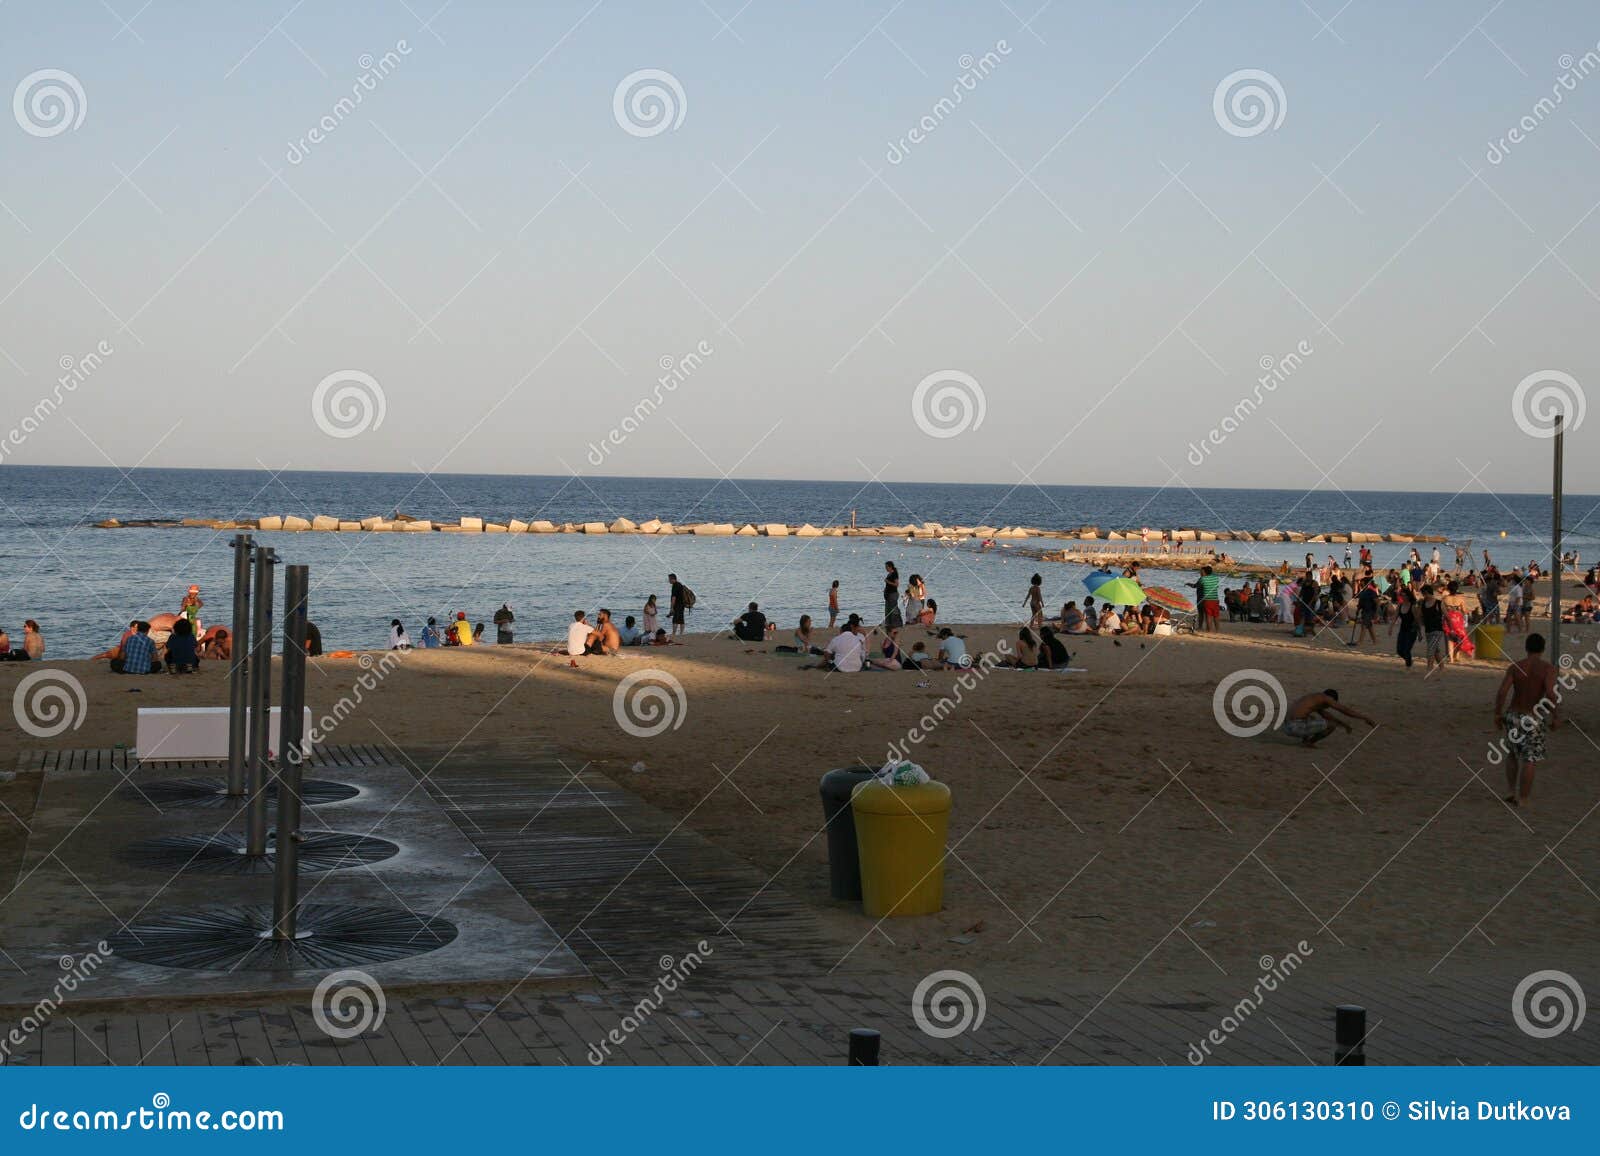 famous la barceloneta beach bordered by the mediterranean sea